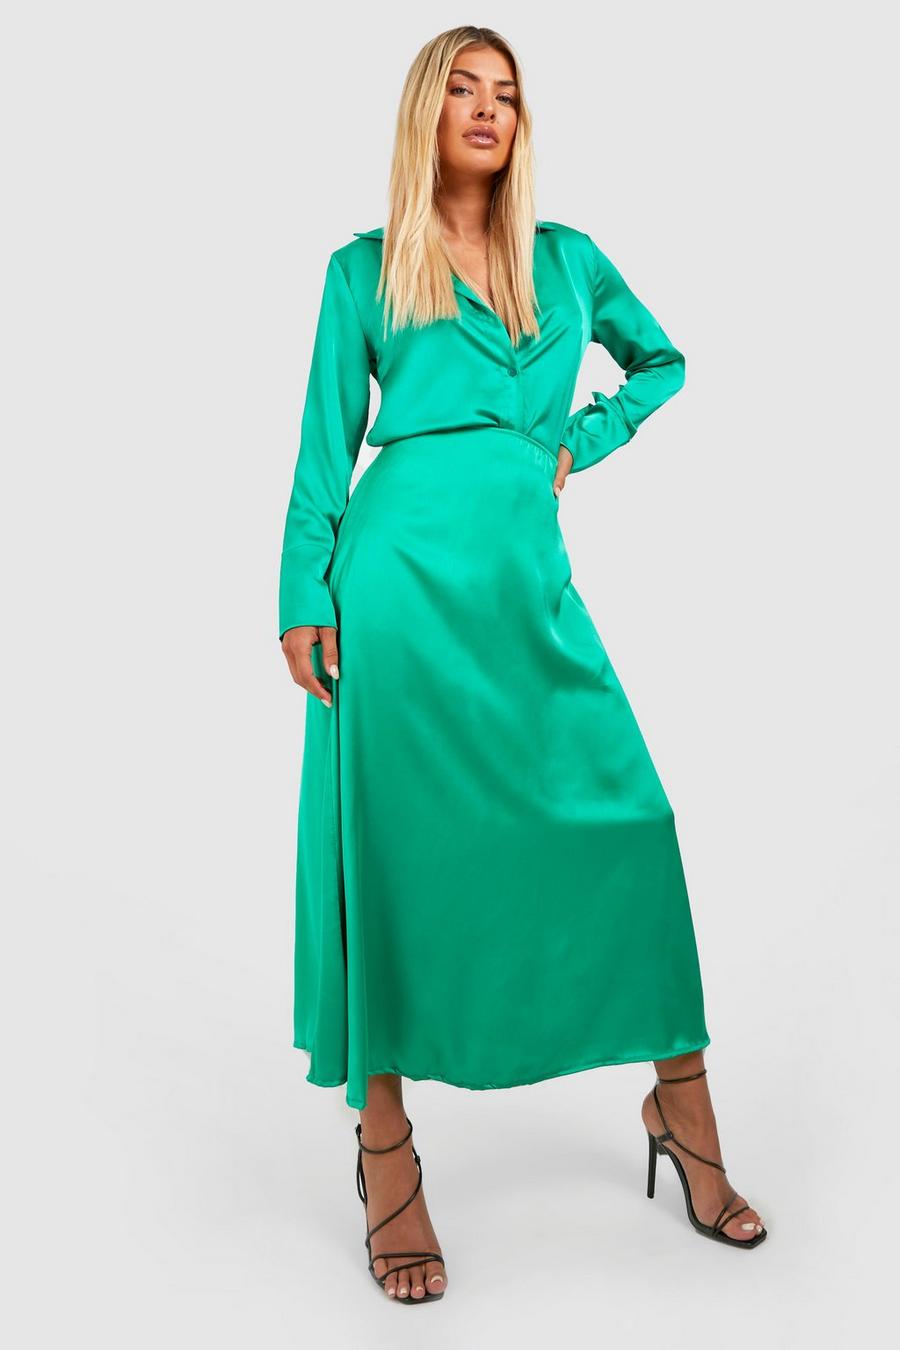 Bright green Satin Shirt & Flowy Midi Skirt image number 1